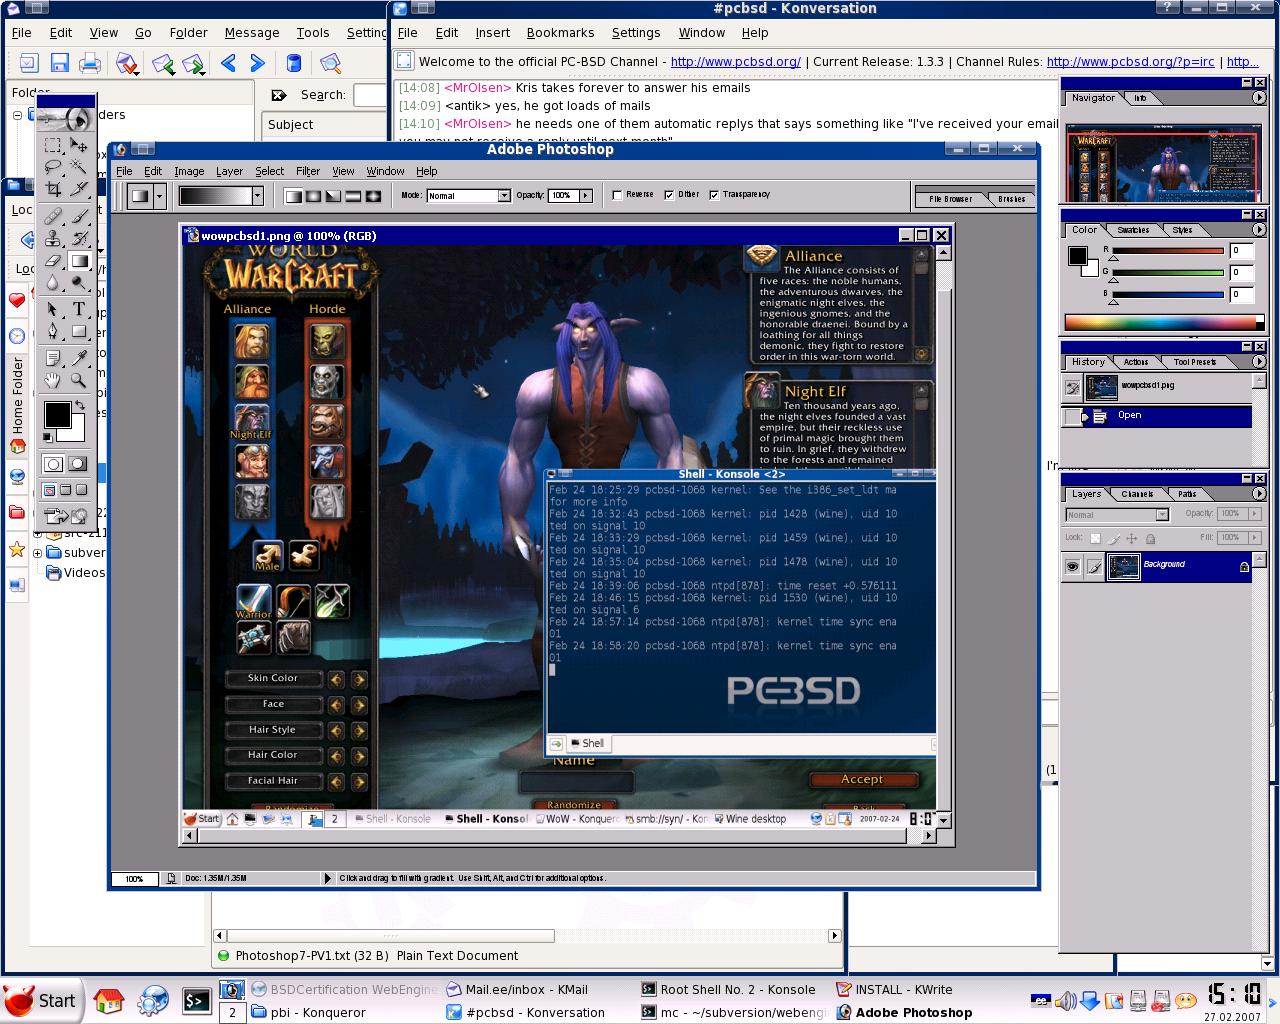 Photoshop ja WoW PC-BSD-s